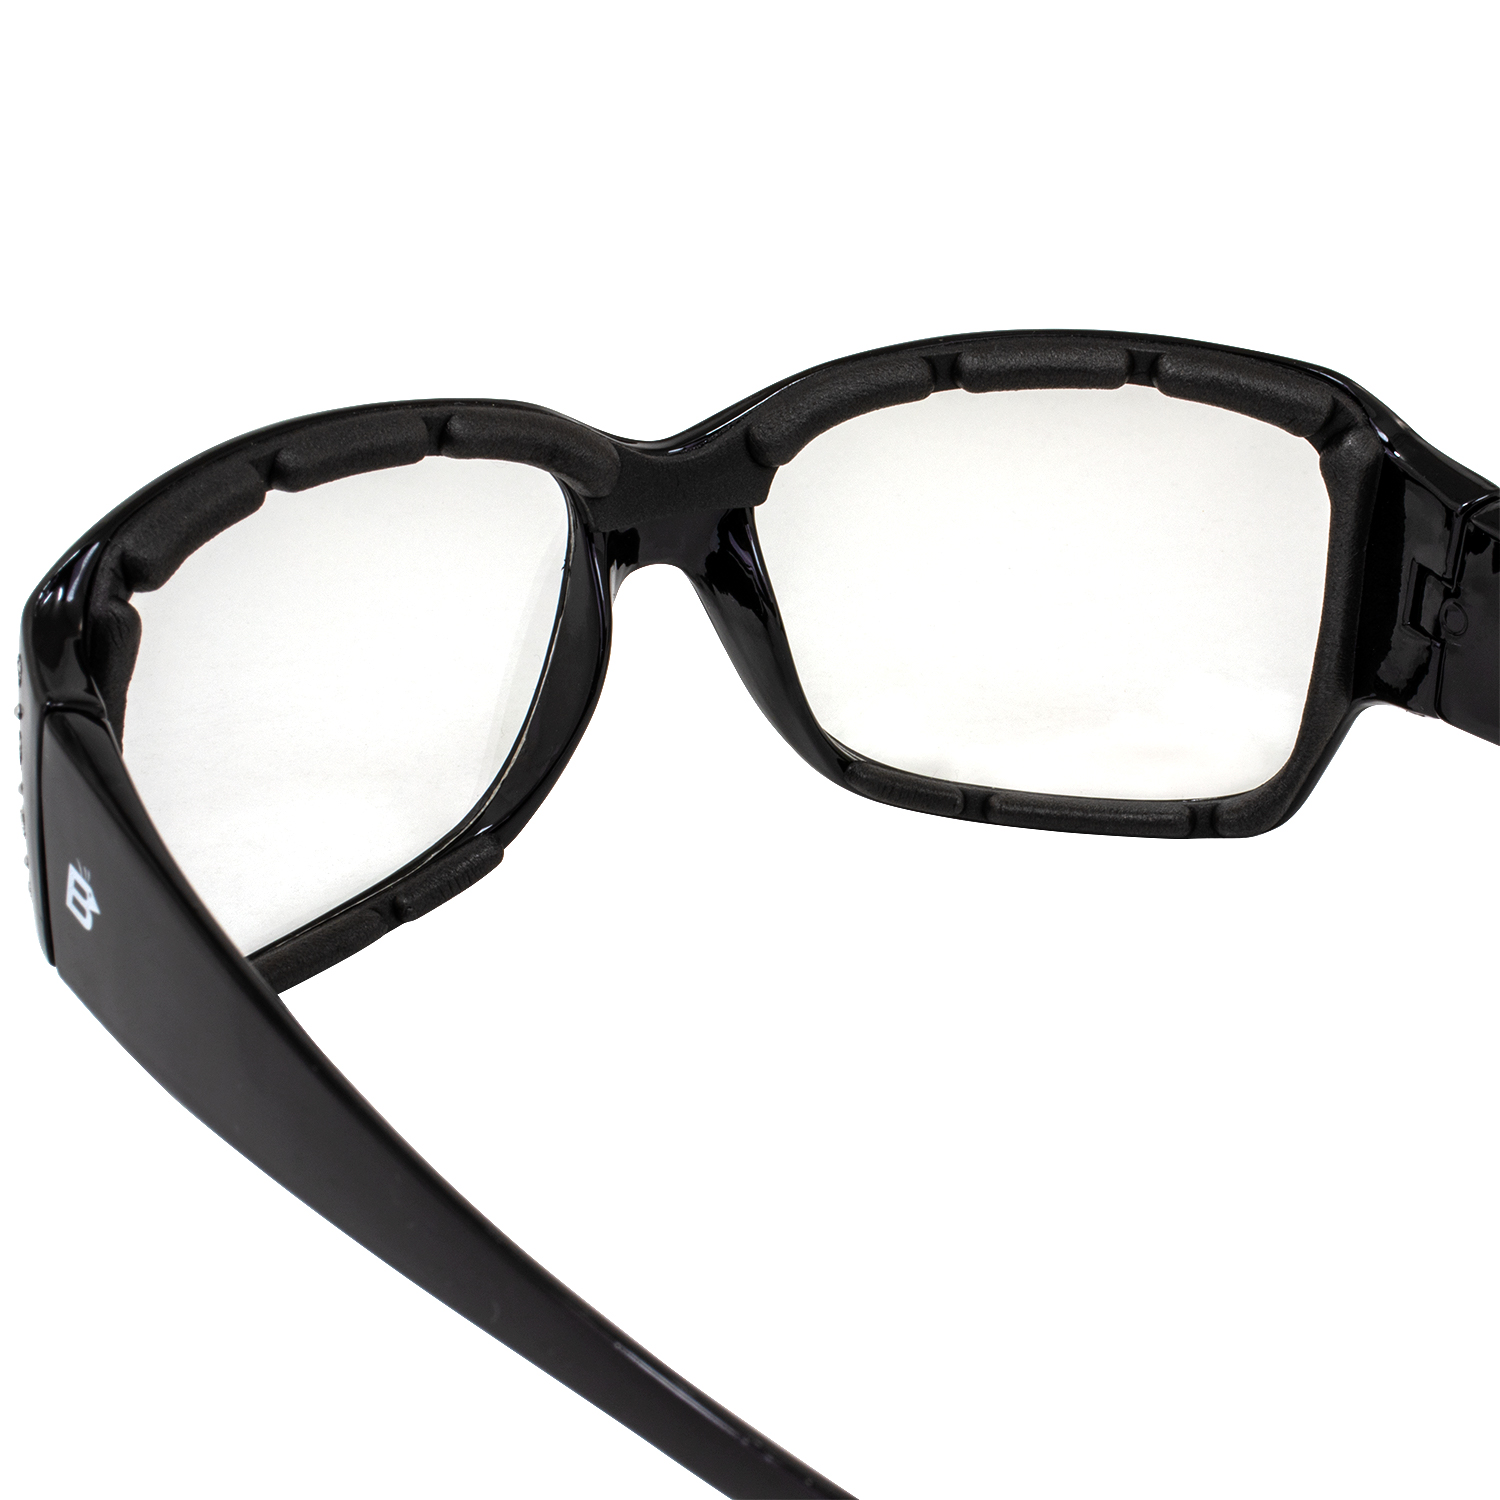 Birdz Eyewear LadyBird Padded Motorcycle Sunglasses Glasses for Women Bling Rhinestone Accents 3 Pairs Black Frame w/Clear Smoke & Driving Mirror Lenses - image 3 of 9